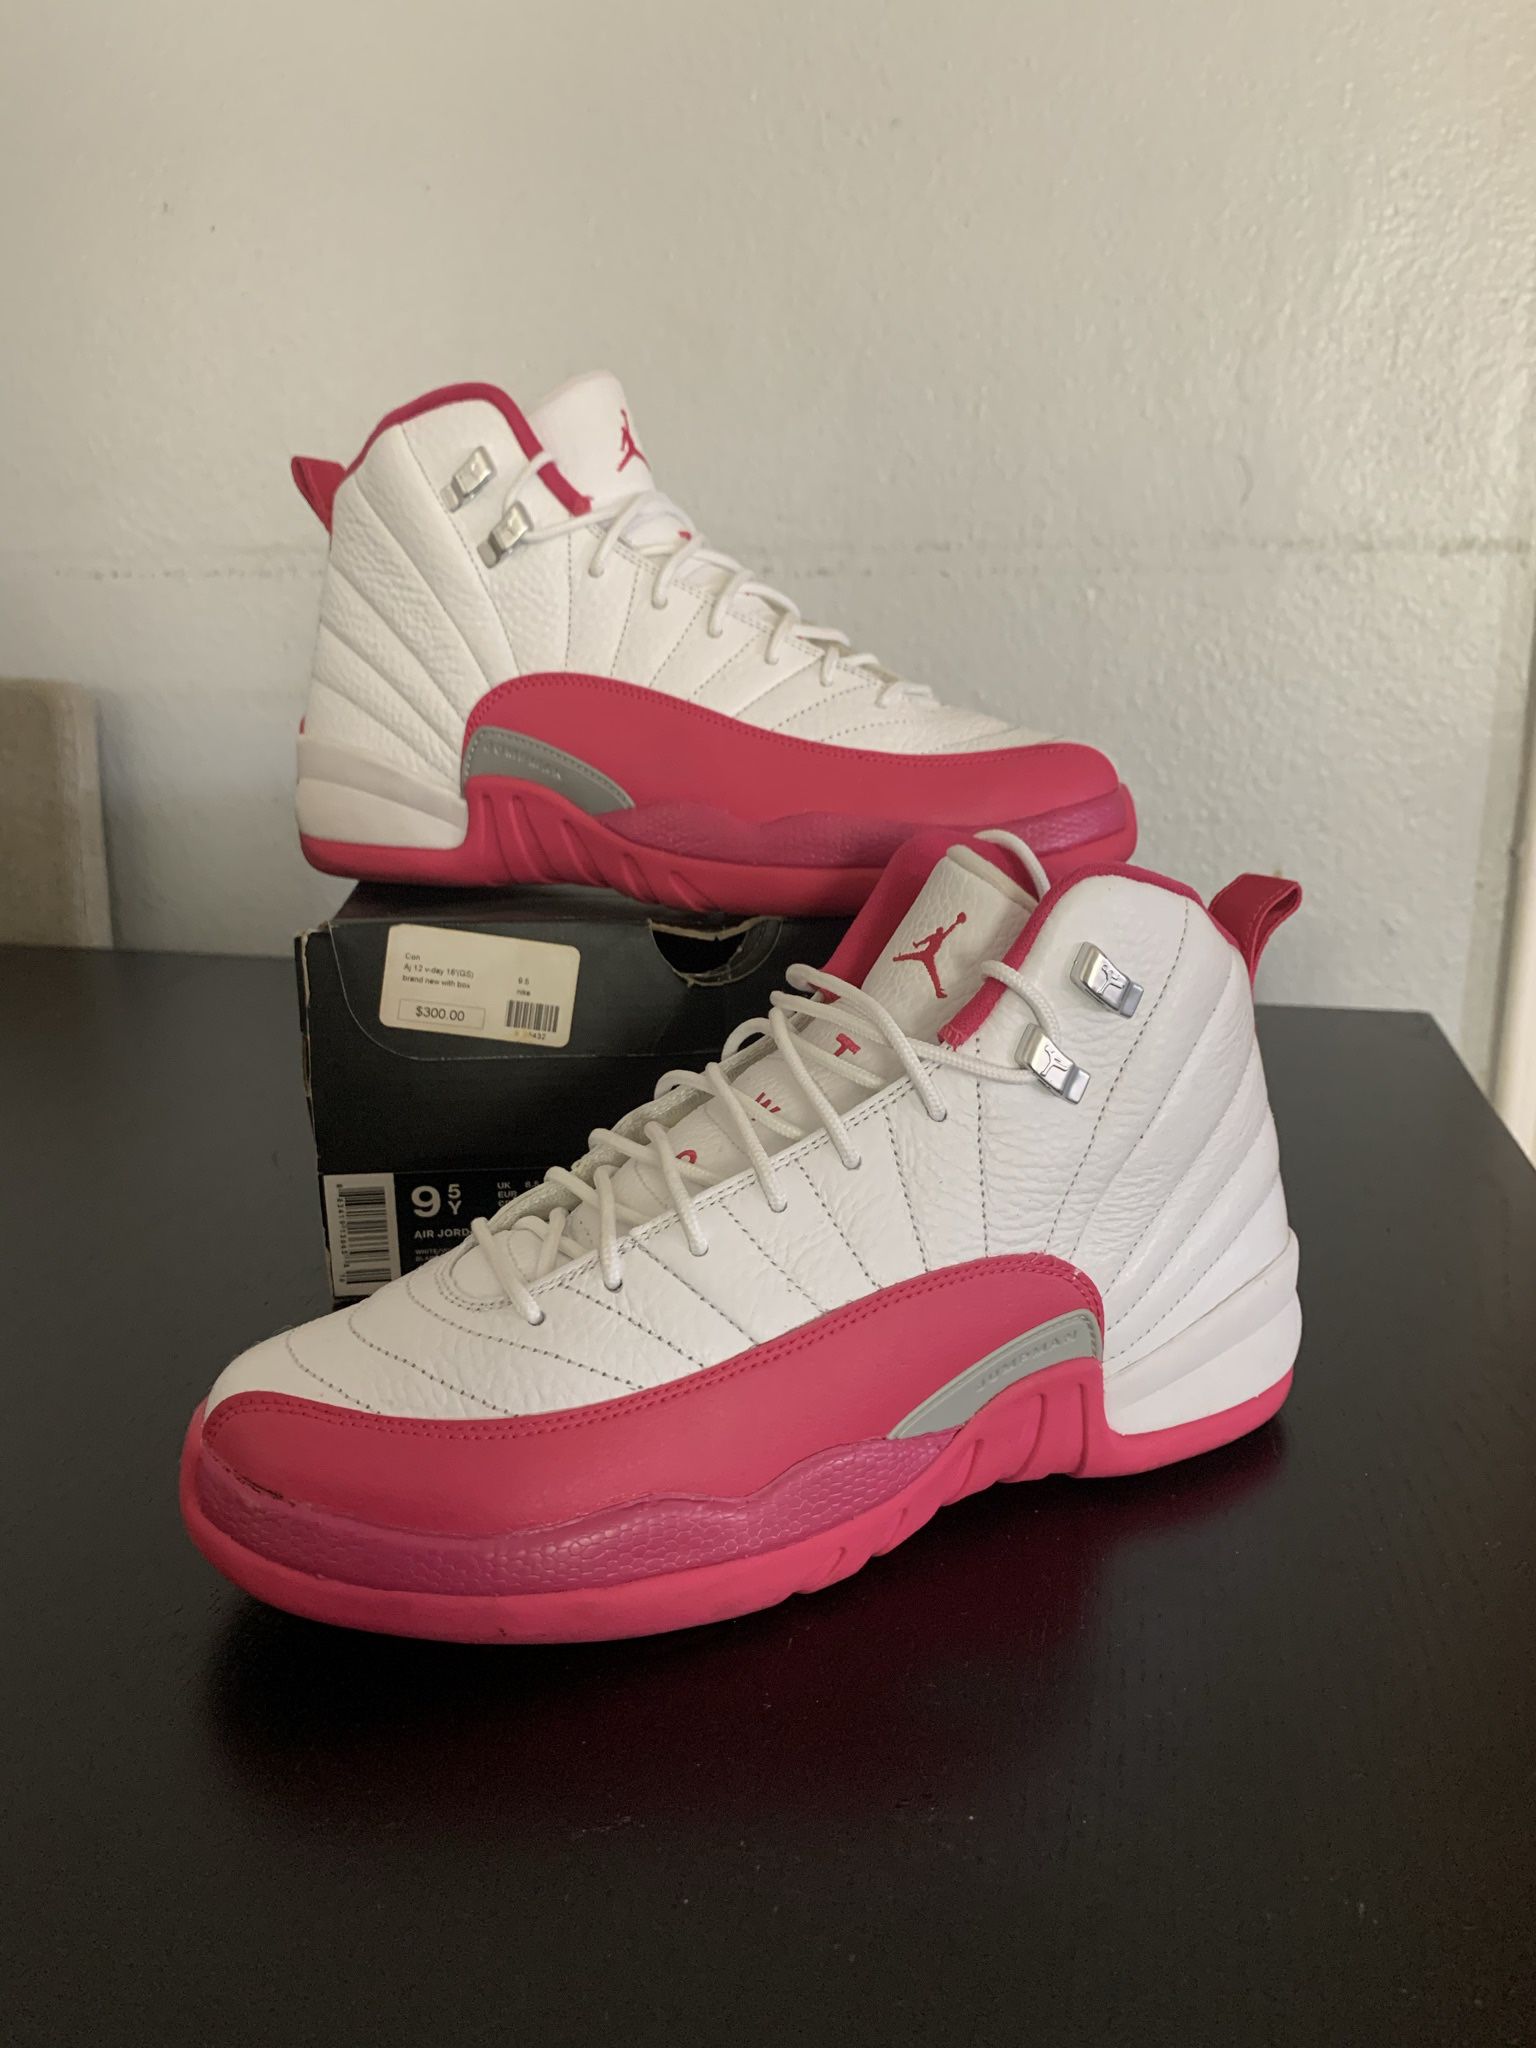 Dynamic Pink Air Jordan 12 for Sale in Long Beach, CA - OfferUp